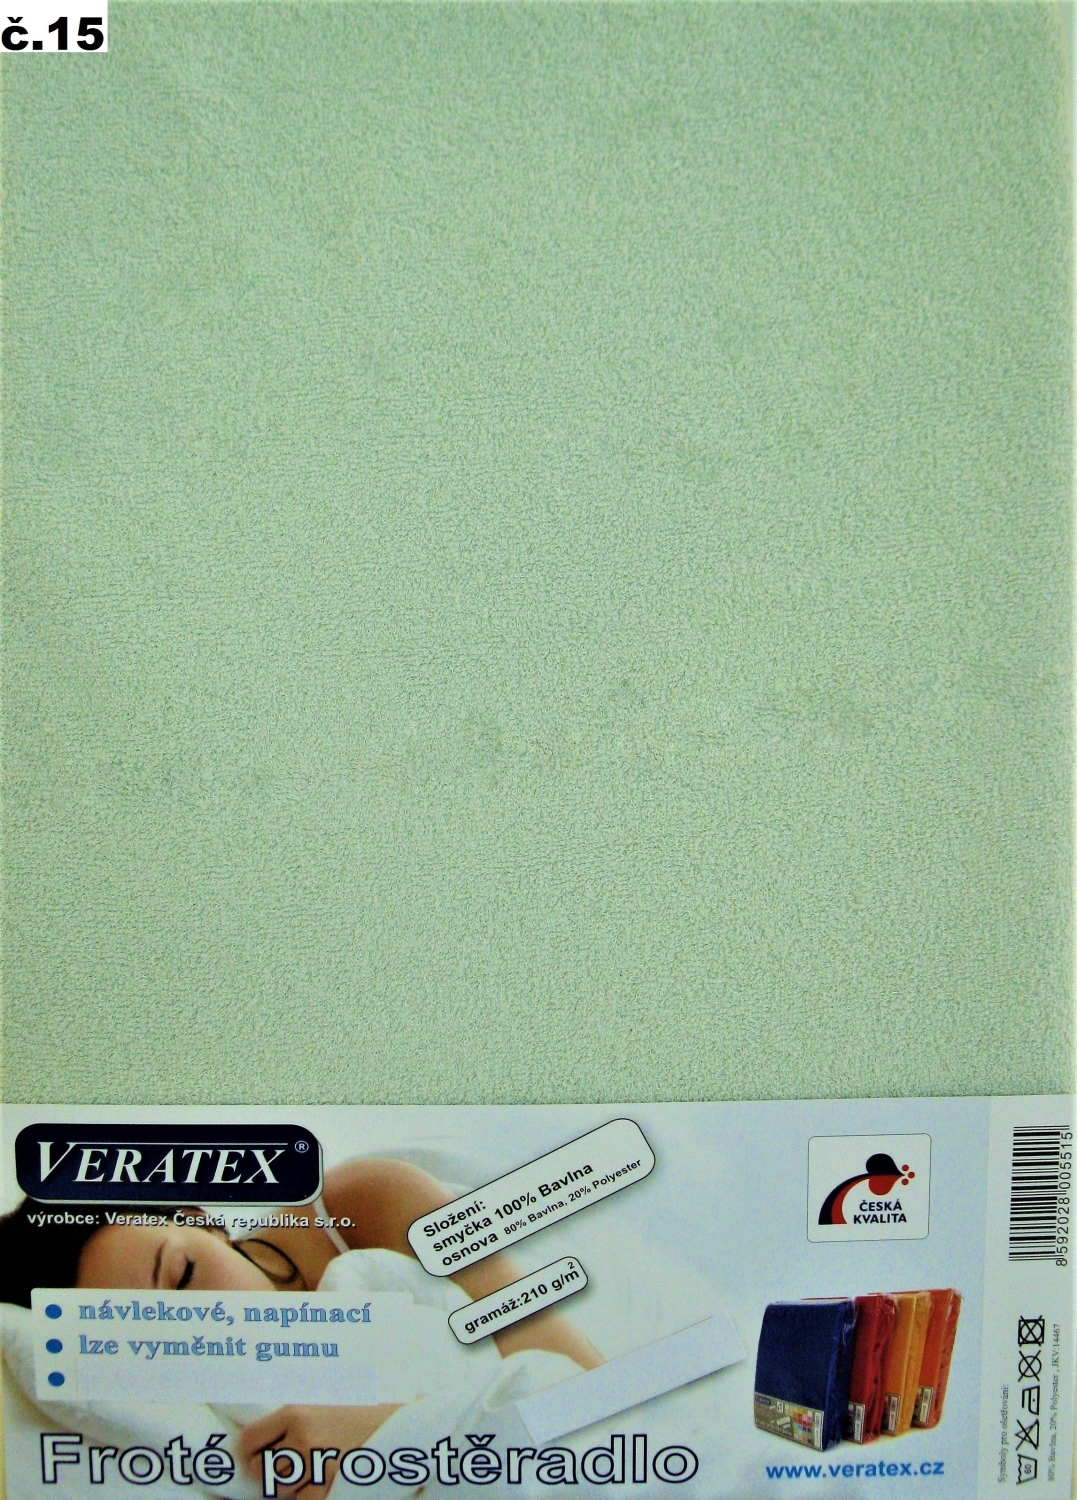 Veratex Froté prostěradlo 180x220/16 cm (č.15 sv.zelená) 180 x 220 cm